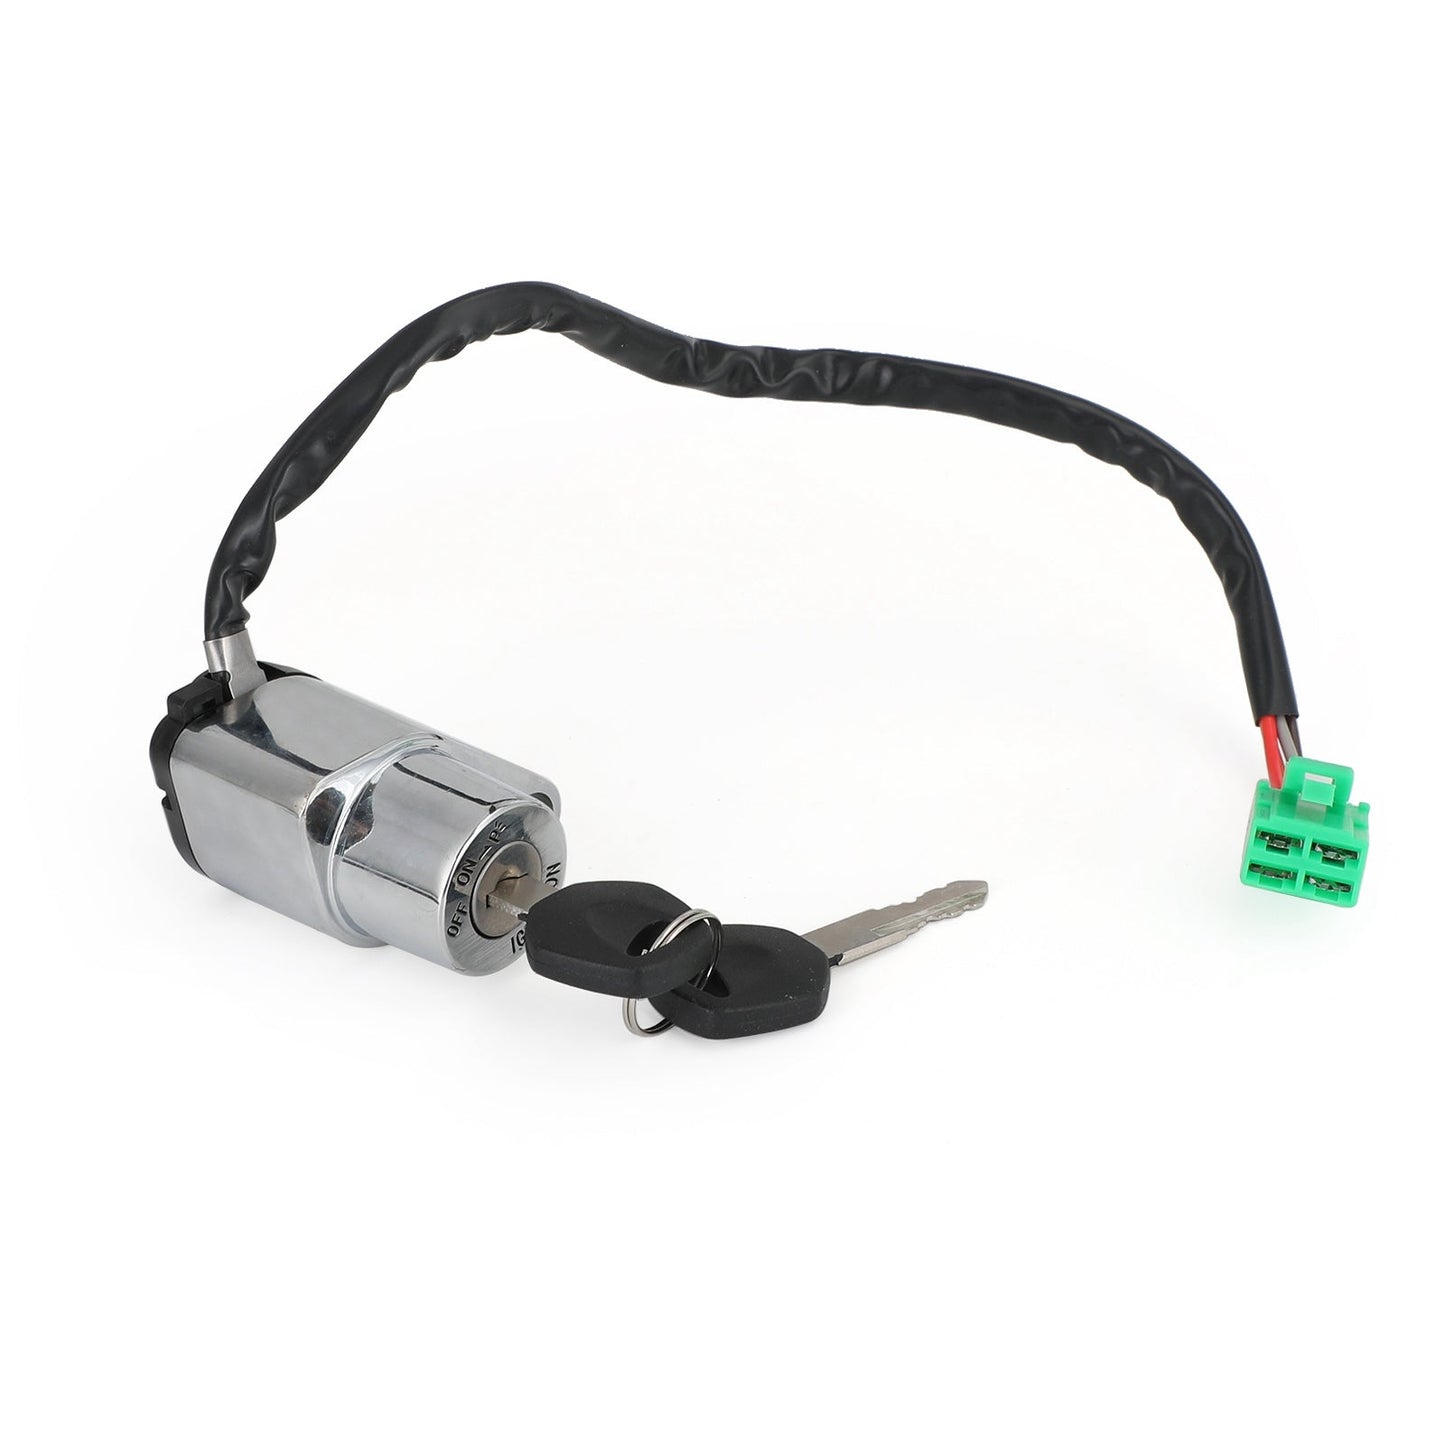 Ignition Switch Fuel Gas Cap Keys for Suzuki Intruder VS700 VS750 VS800 VS1400